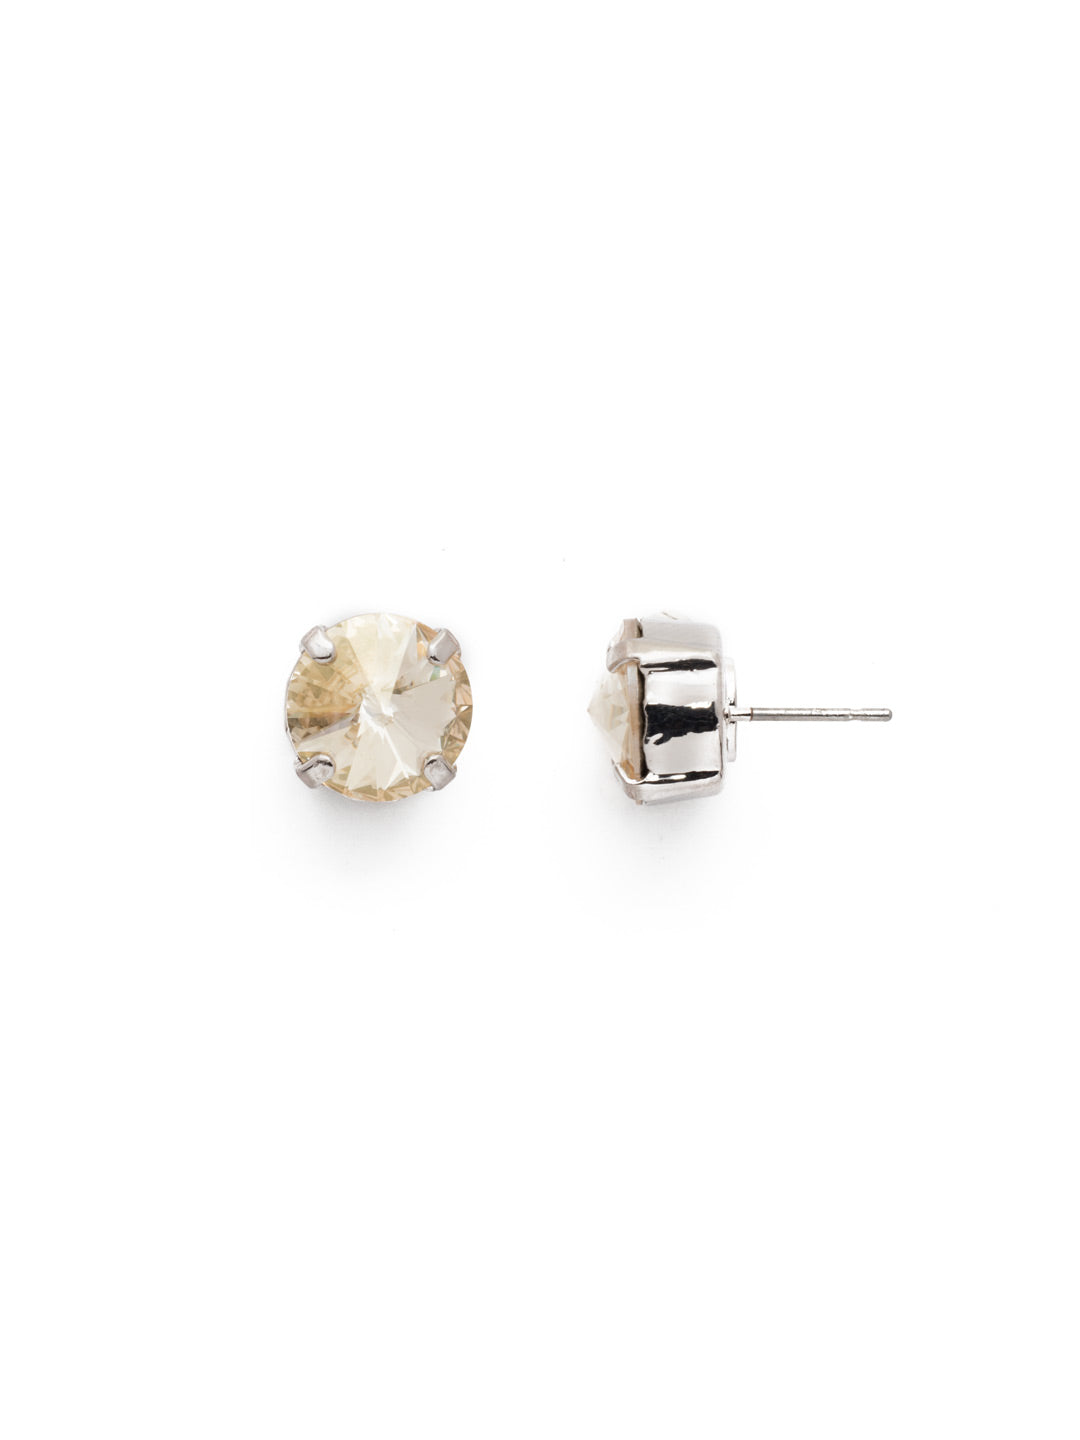 Product Image: London Stud Earrings